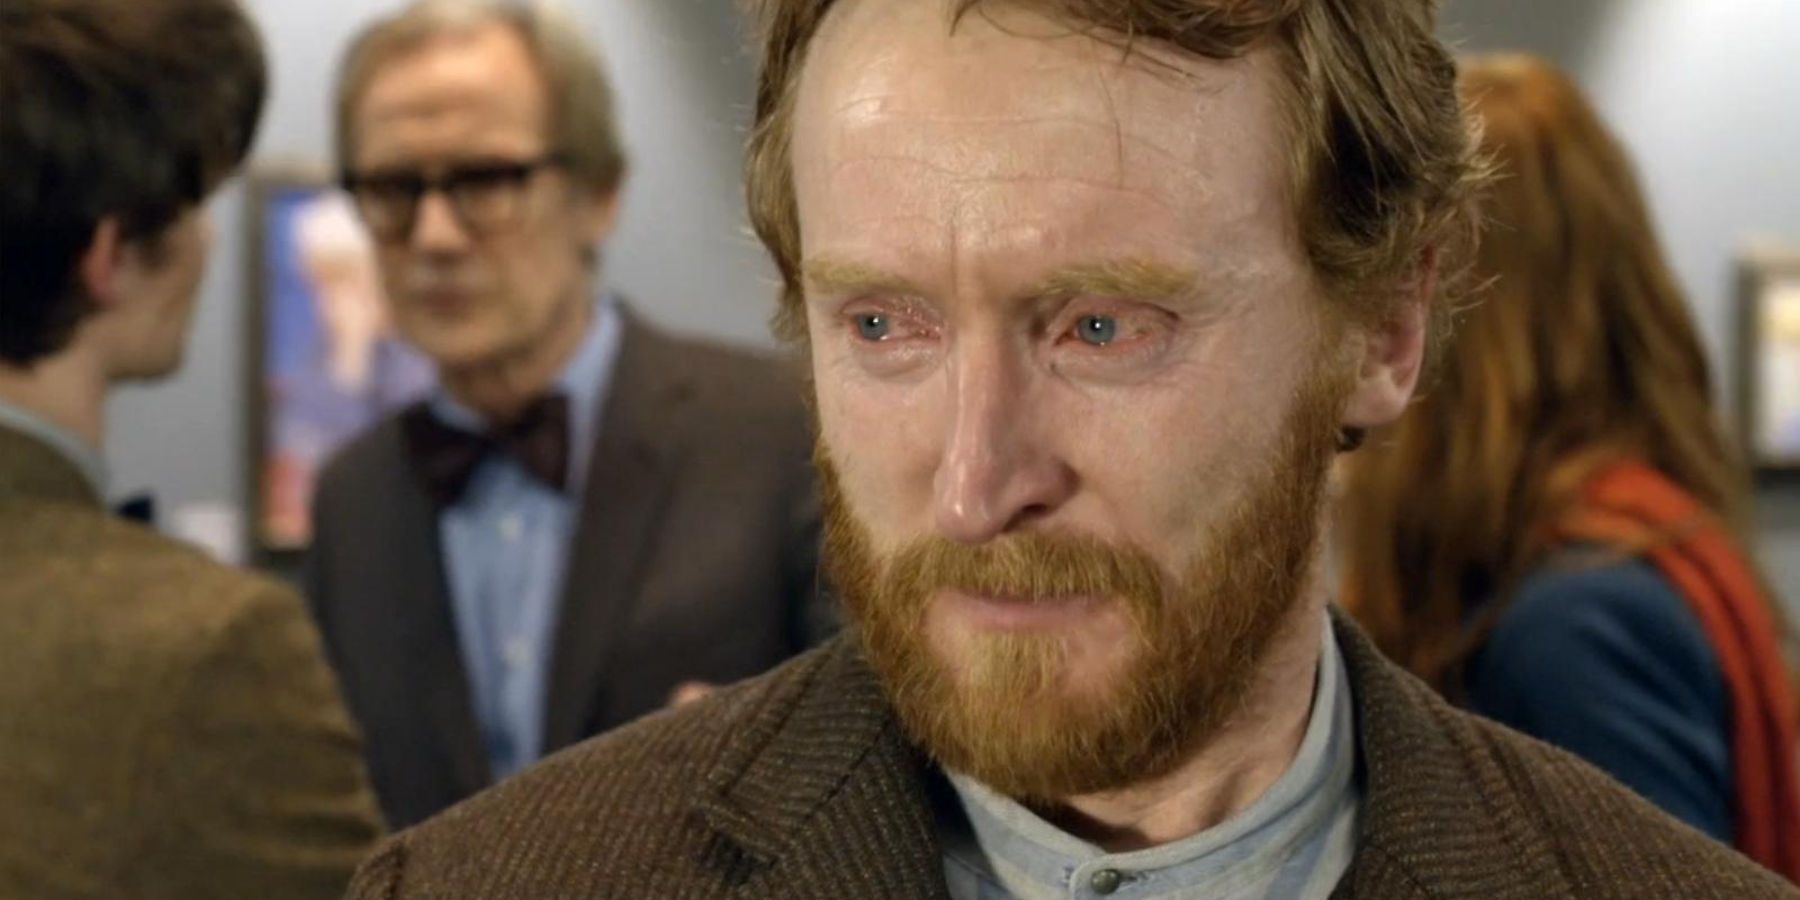 Vincent Van Gogh looking emotional in Doctor Who